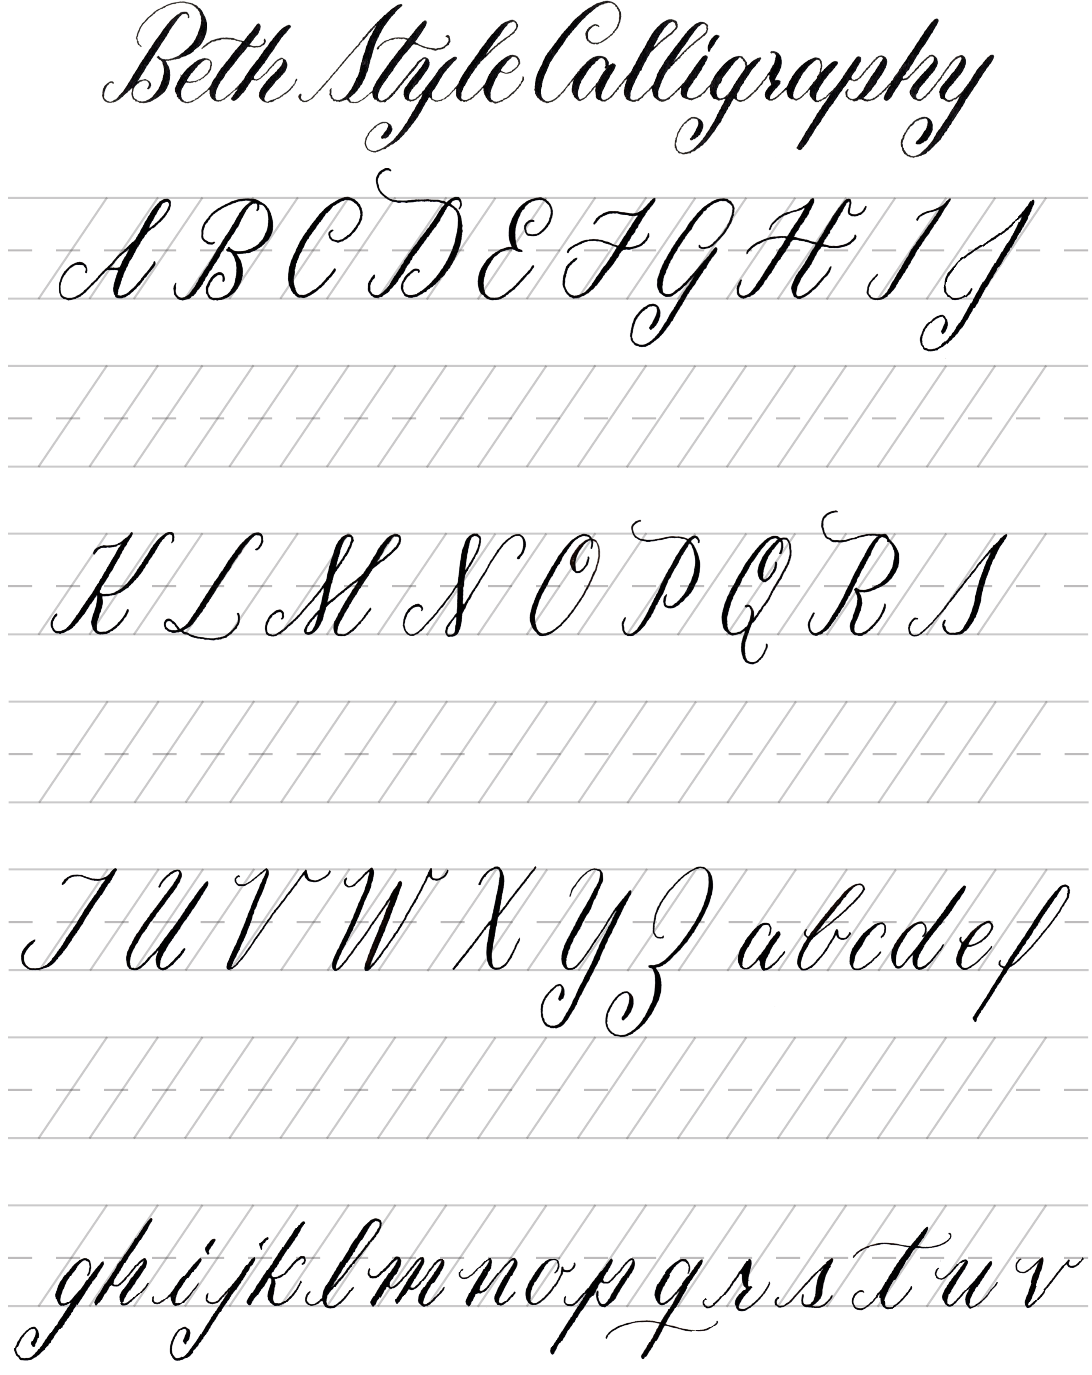 Beth Style Standard Calligraphy Worksheet 1 @The Postman's Knock ...